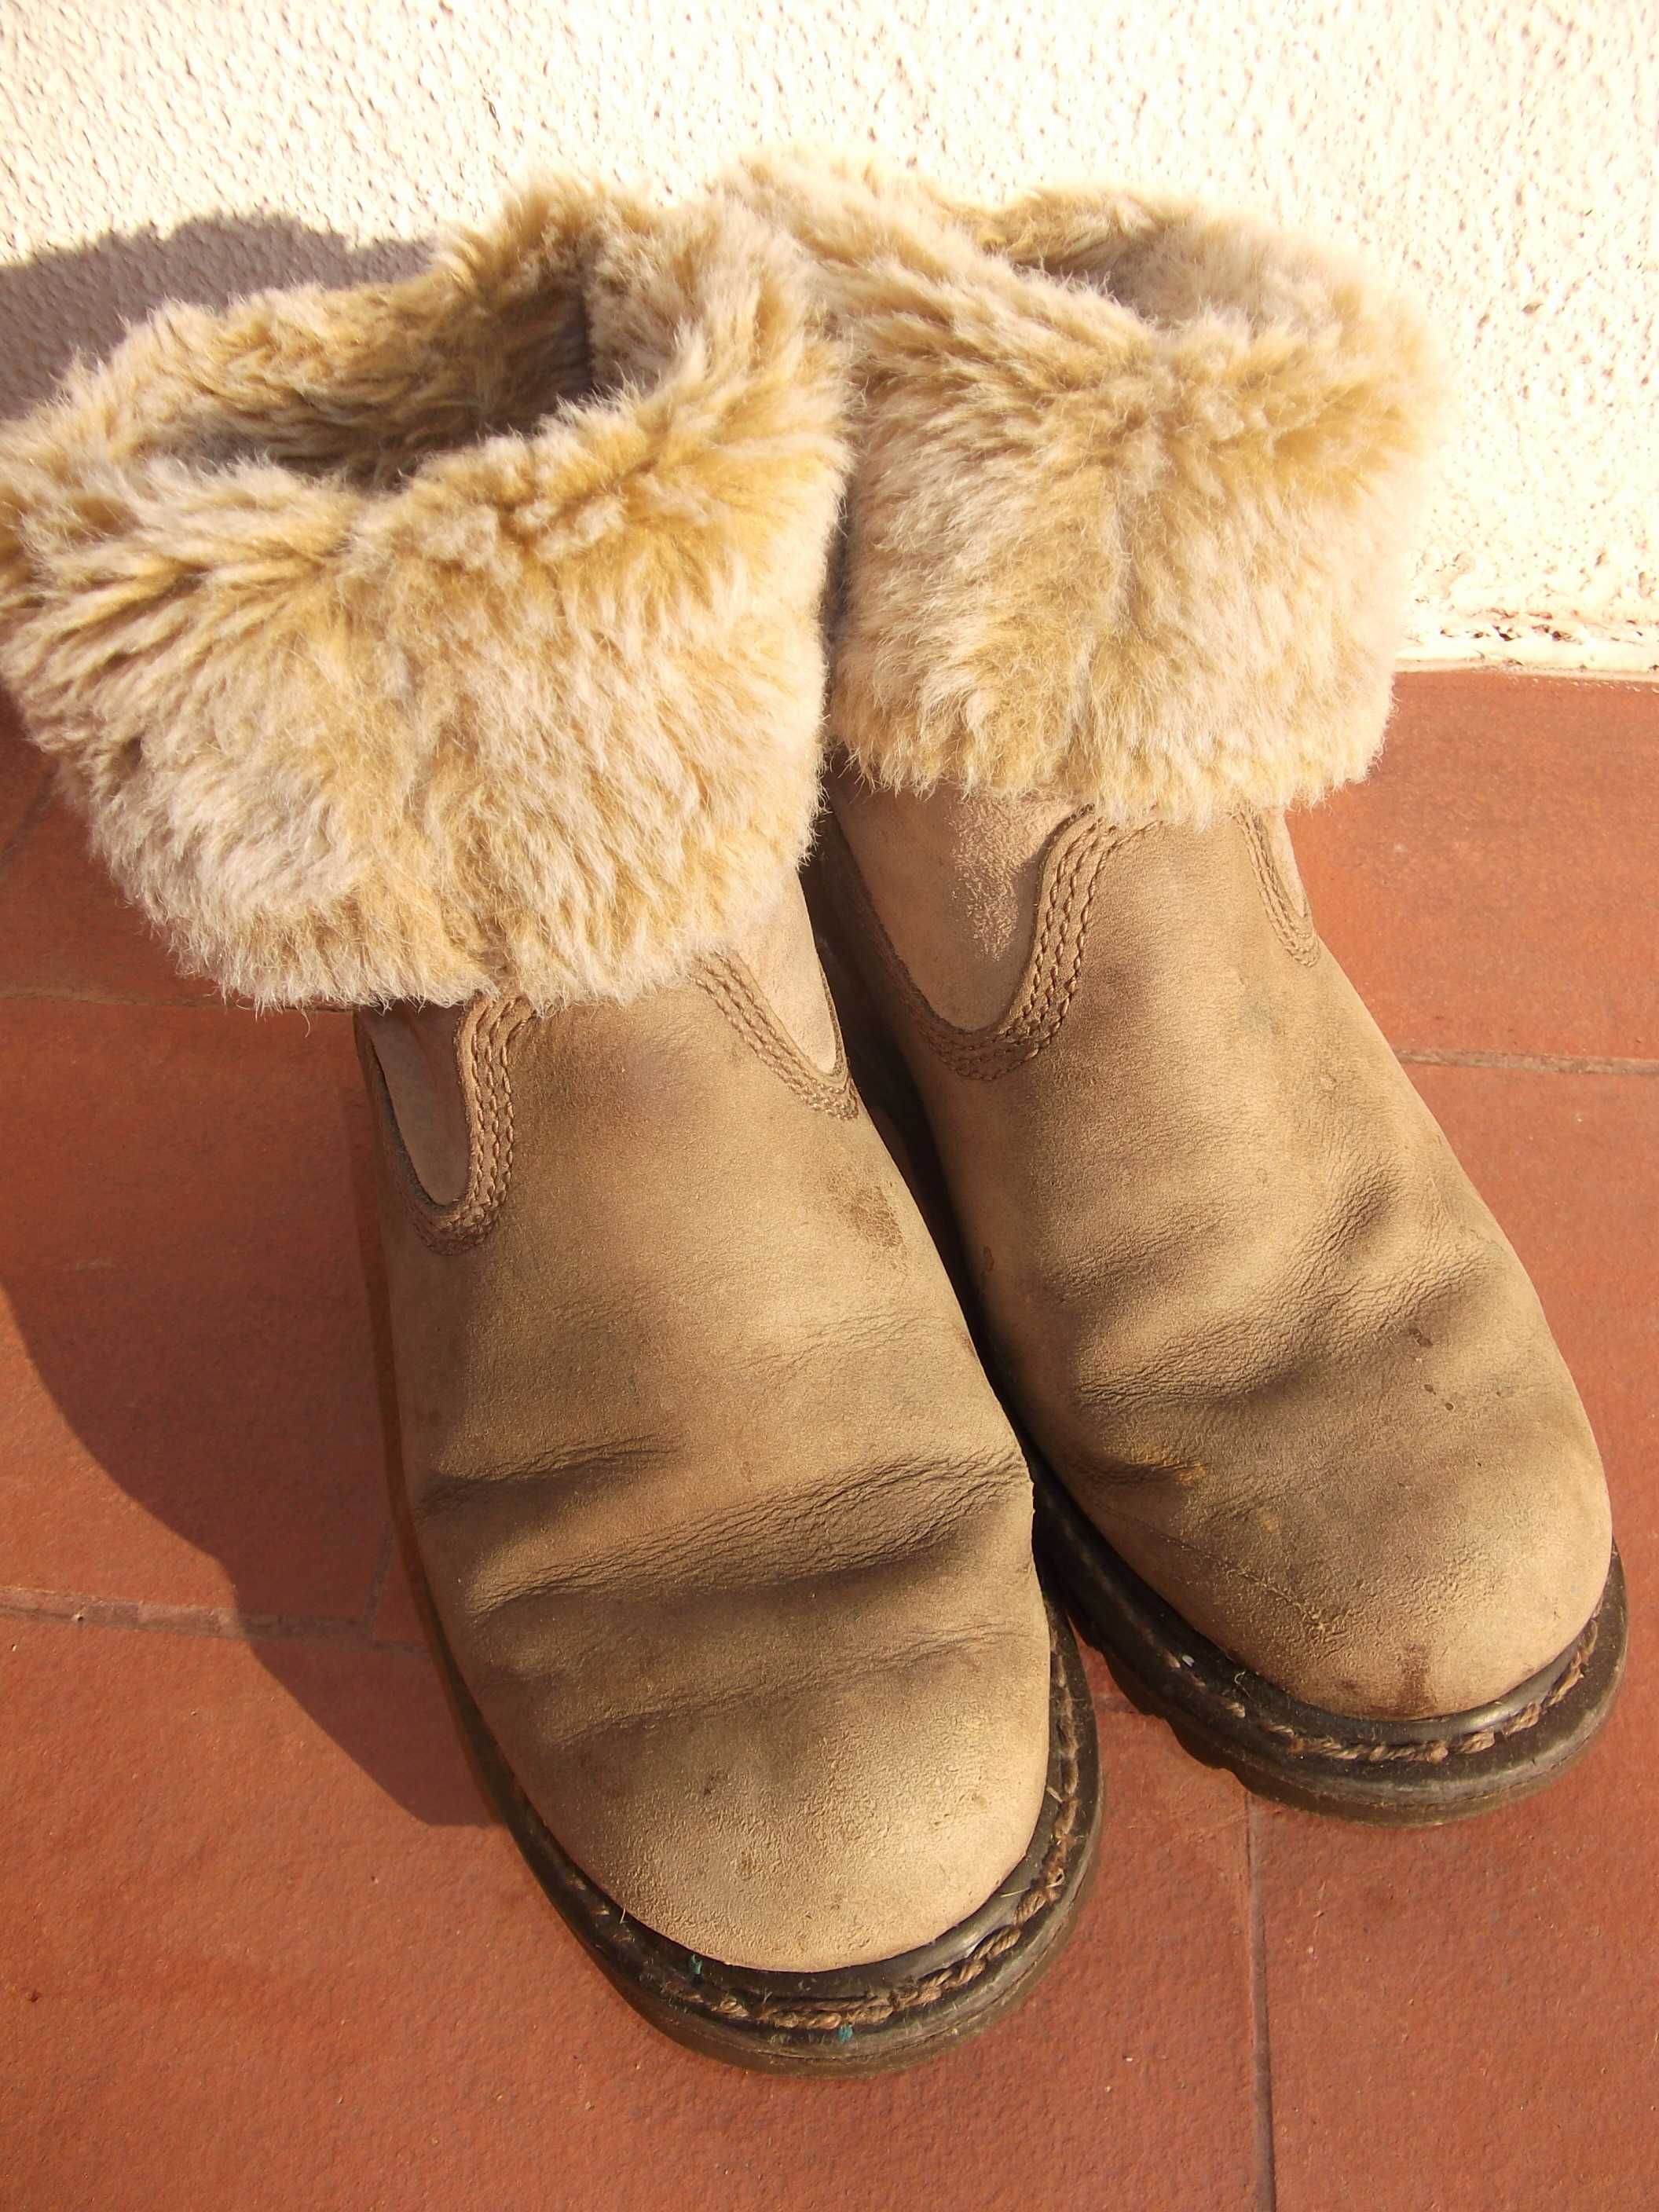 Botas em pele com pêlo / Leather boots with fur - CATERPILLAR (n. 37)